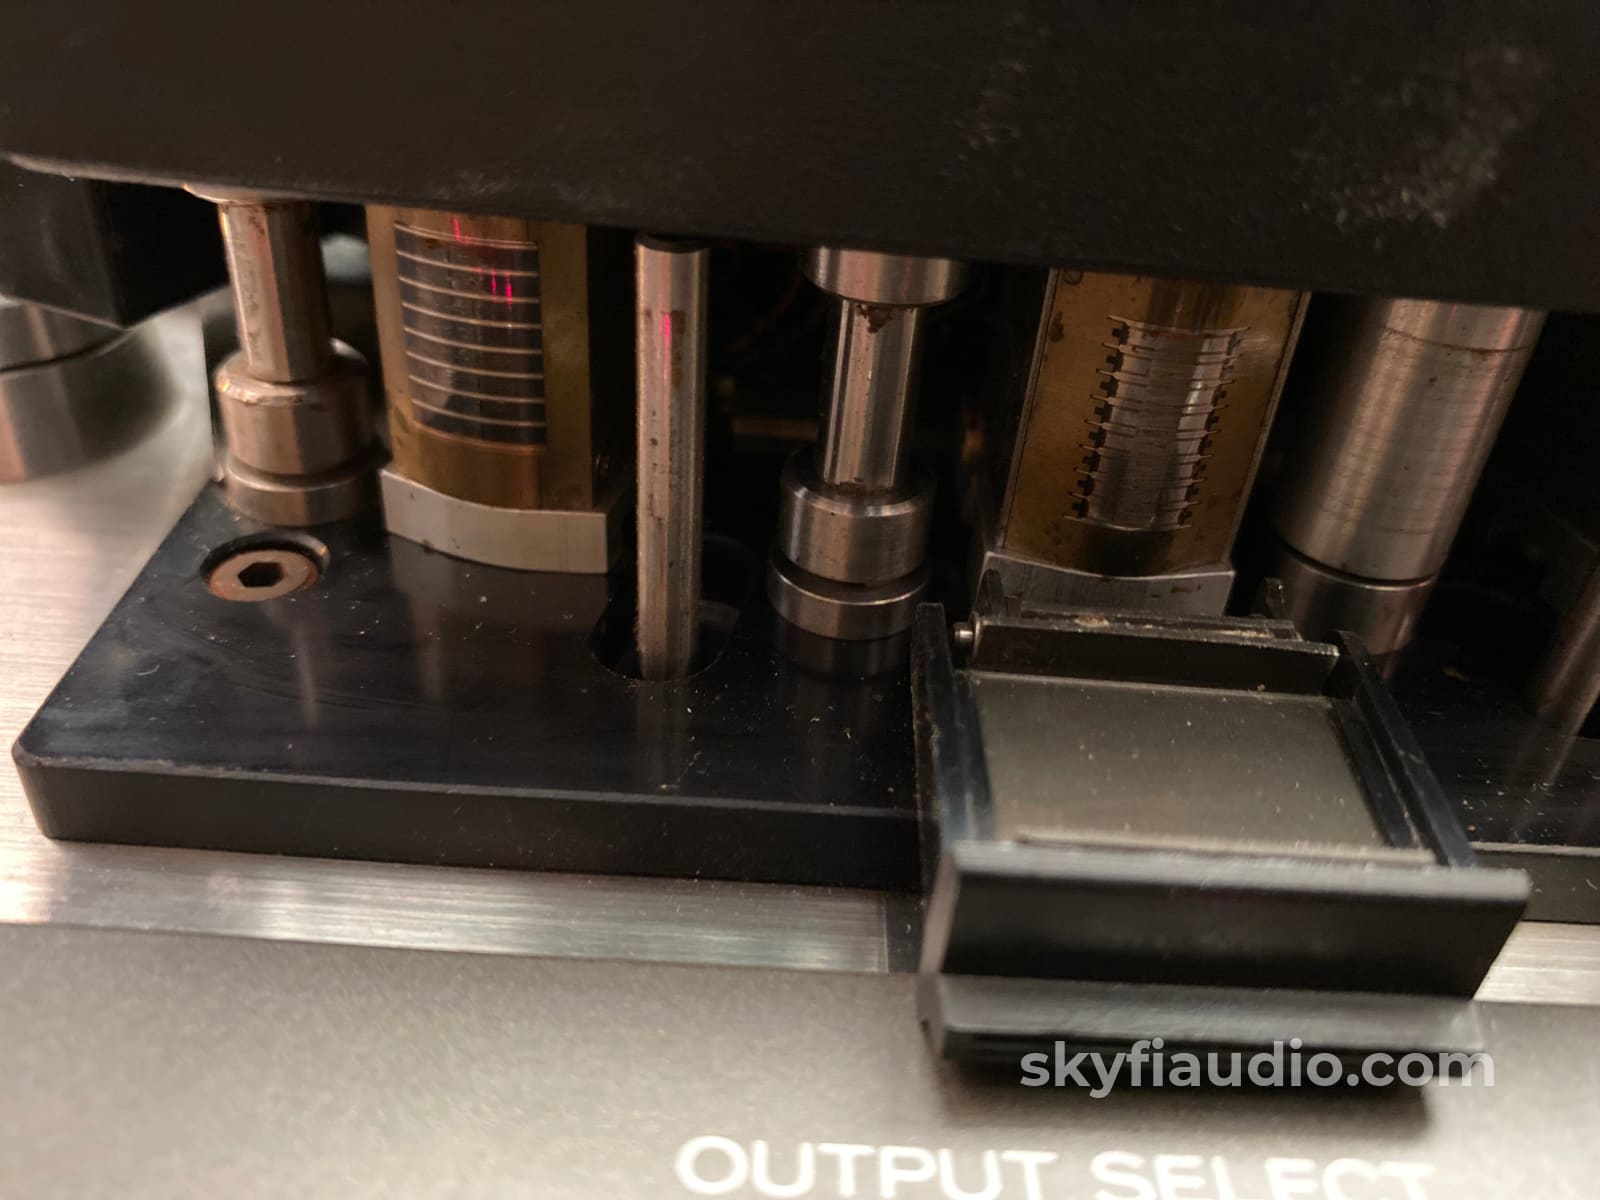 Teac Tascam 80-8 Series Vintage Reel To W/ Dx8 Dbx Module & Remote Tape Deck